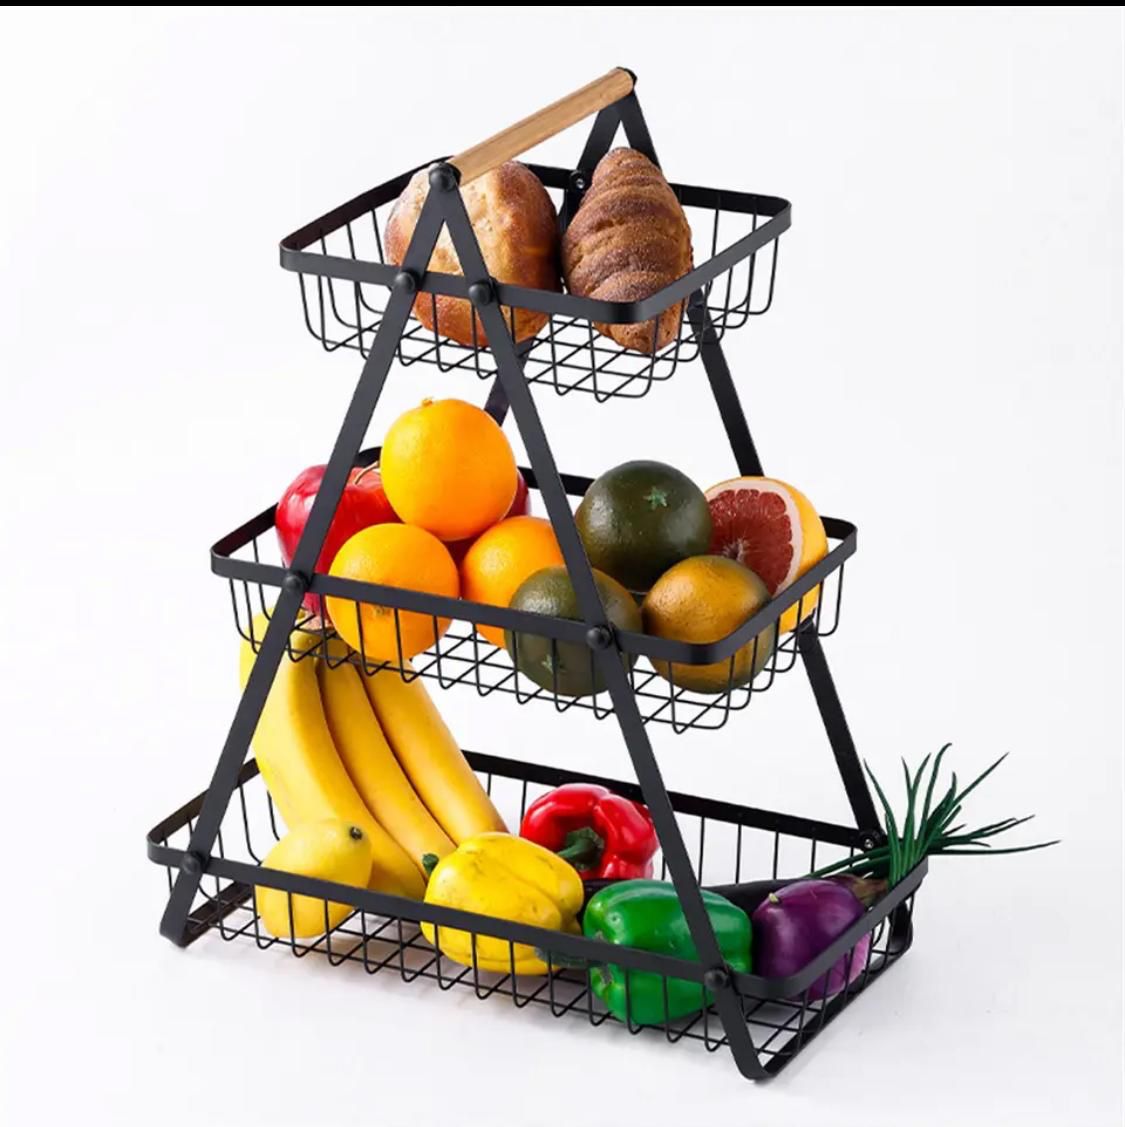 Fruit Basket,Fruit Bowl Holder Bread Basket Vegetable Rack, Detachable Fruit Holder for Fruit, Vegetables, Snacks in Home, Kitchen Office